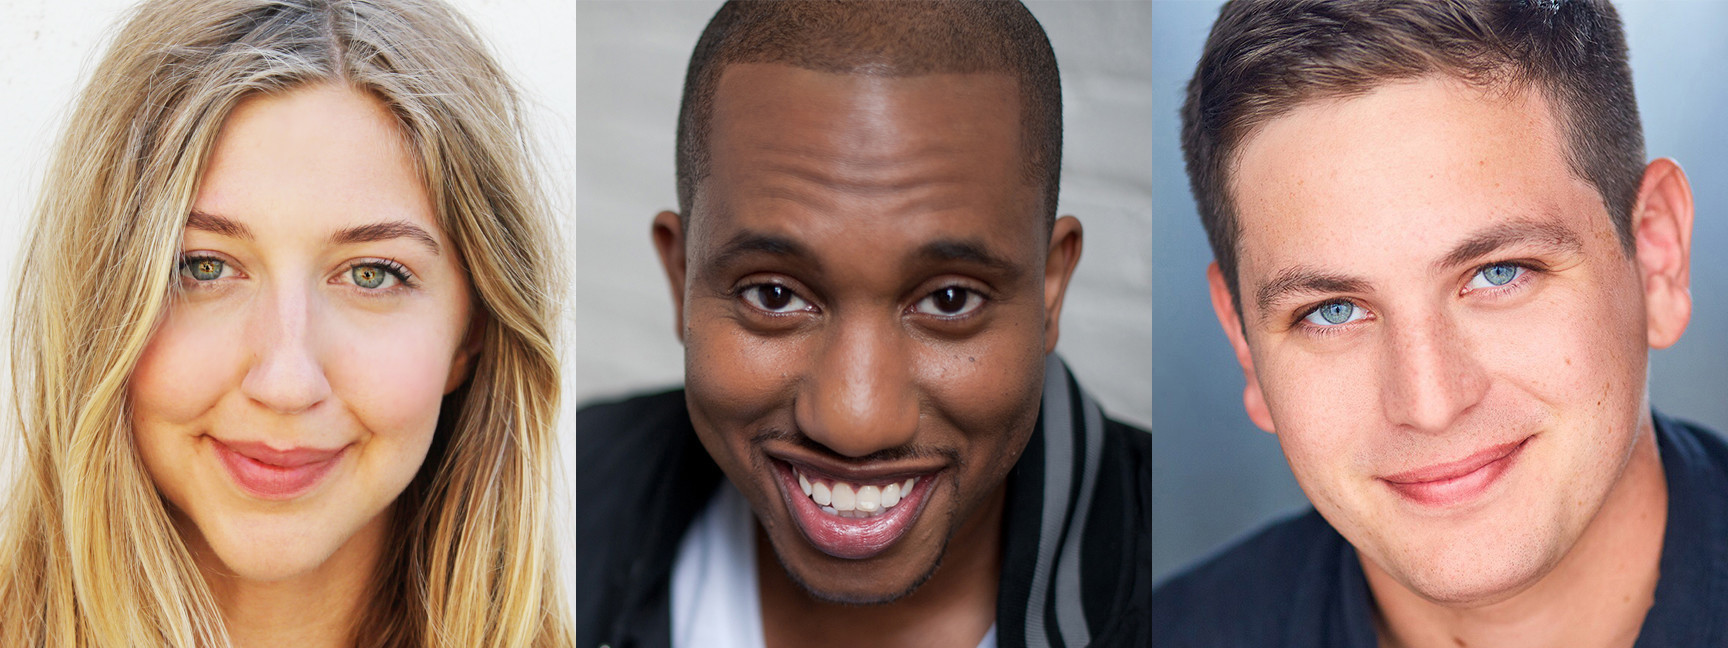 Meet the new cast members of 'Saturday Night Live' LA Times